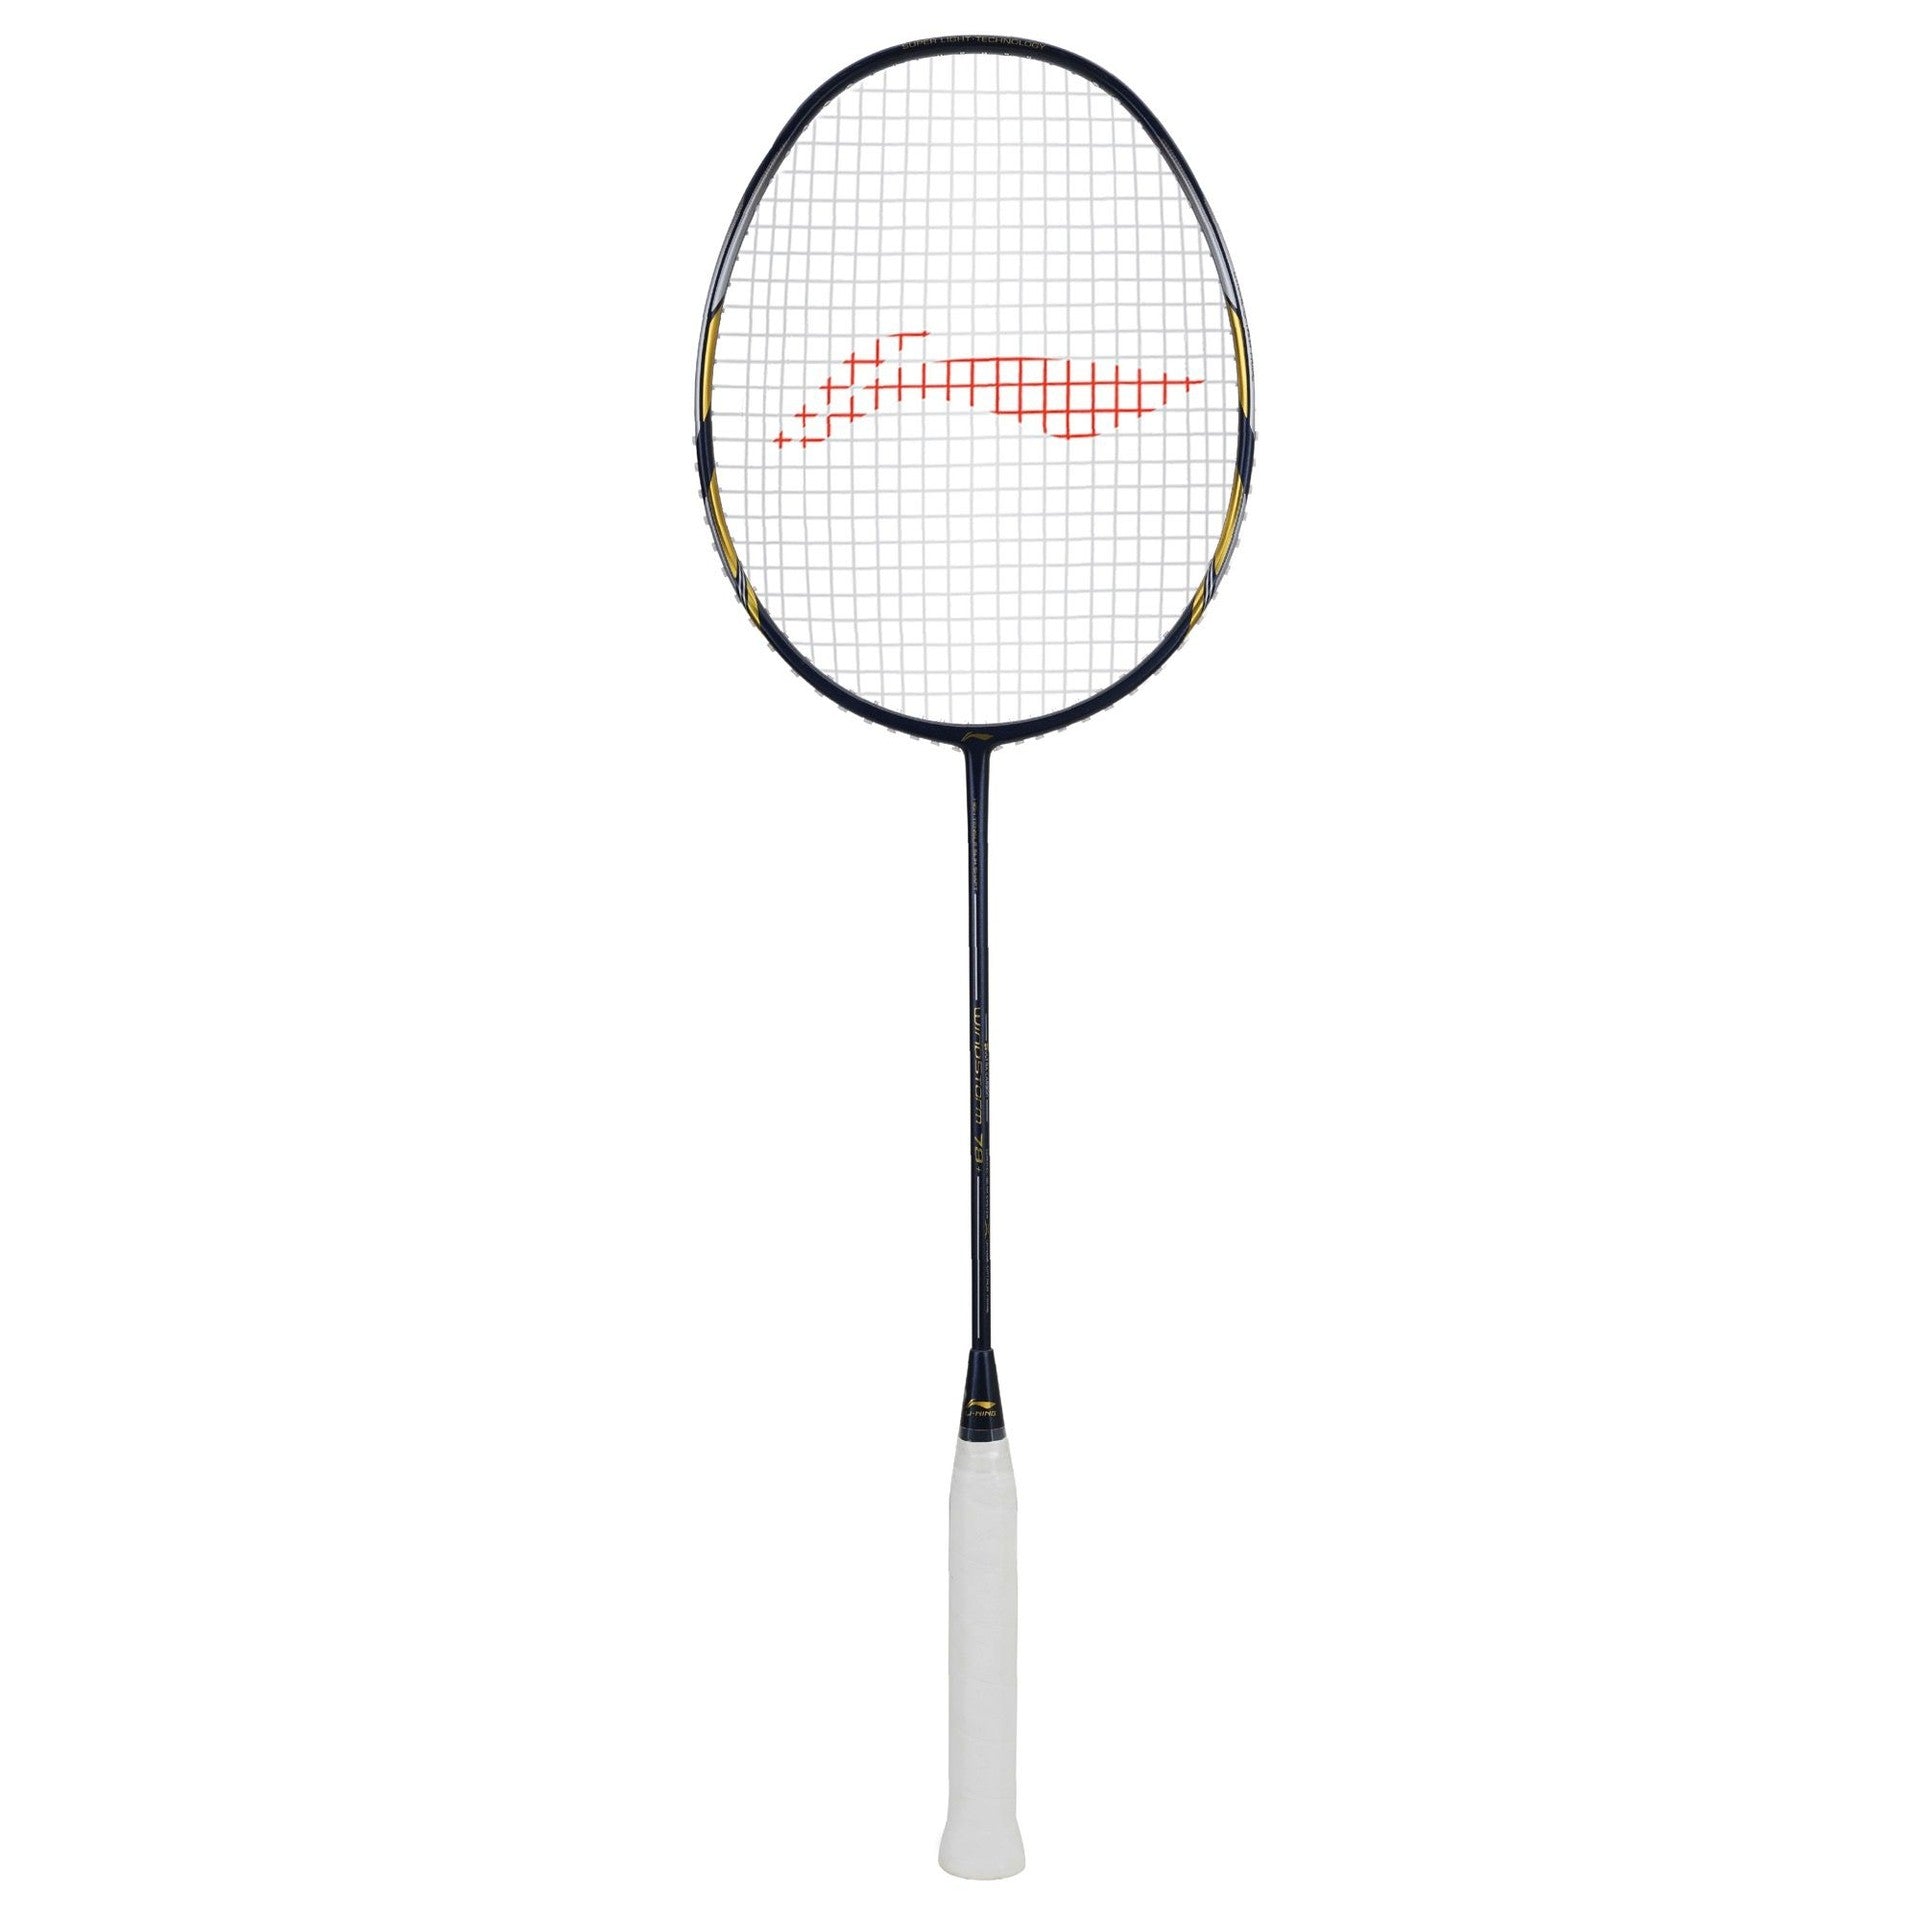 LI-NING Windstorm 78+ Badminton Racket